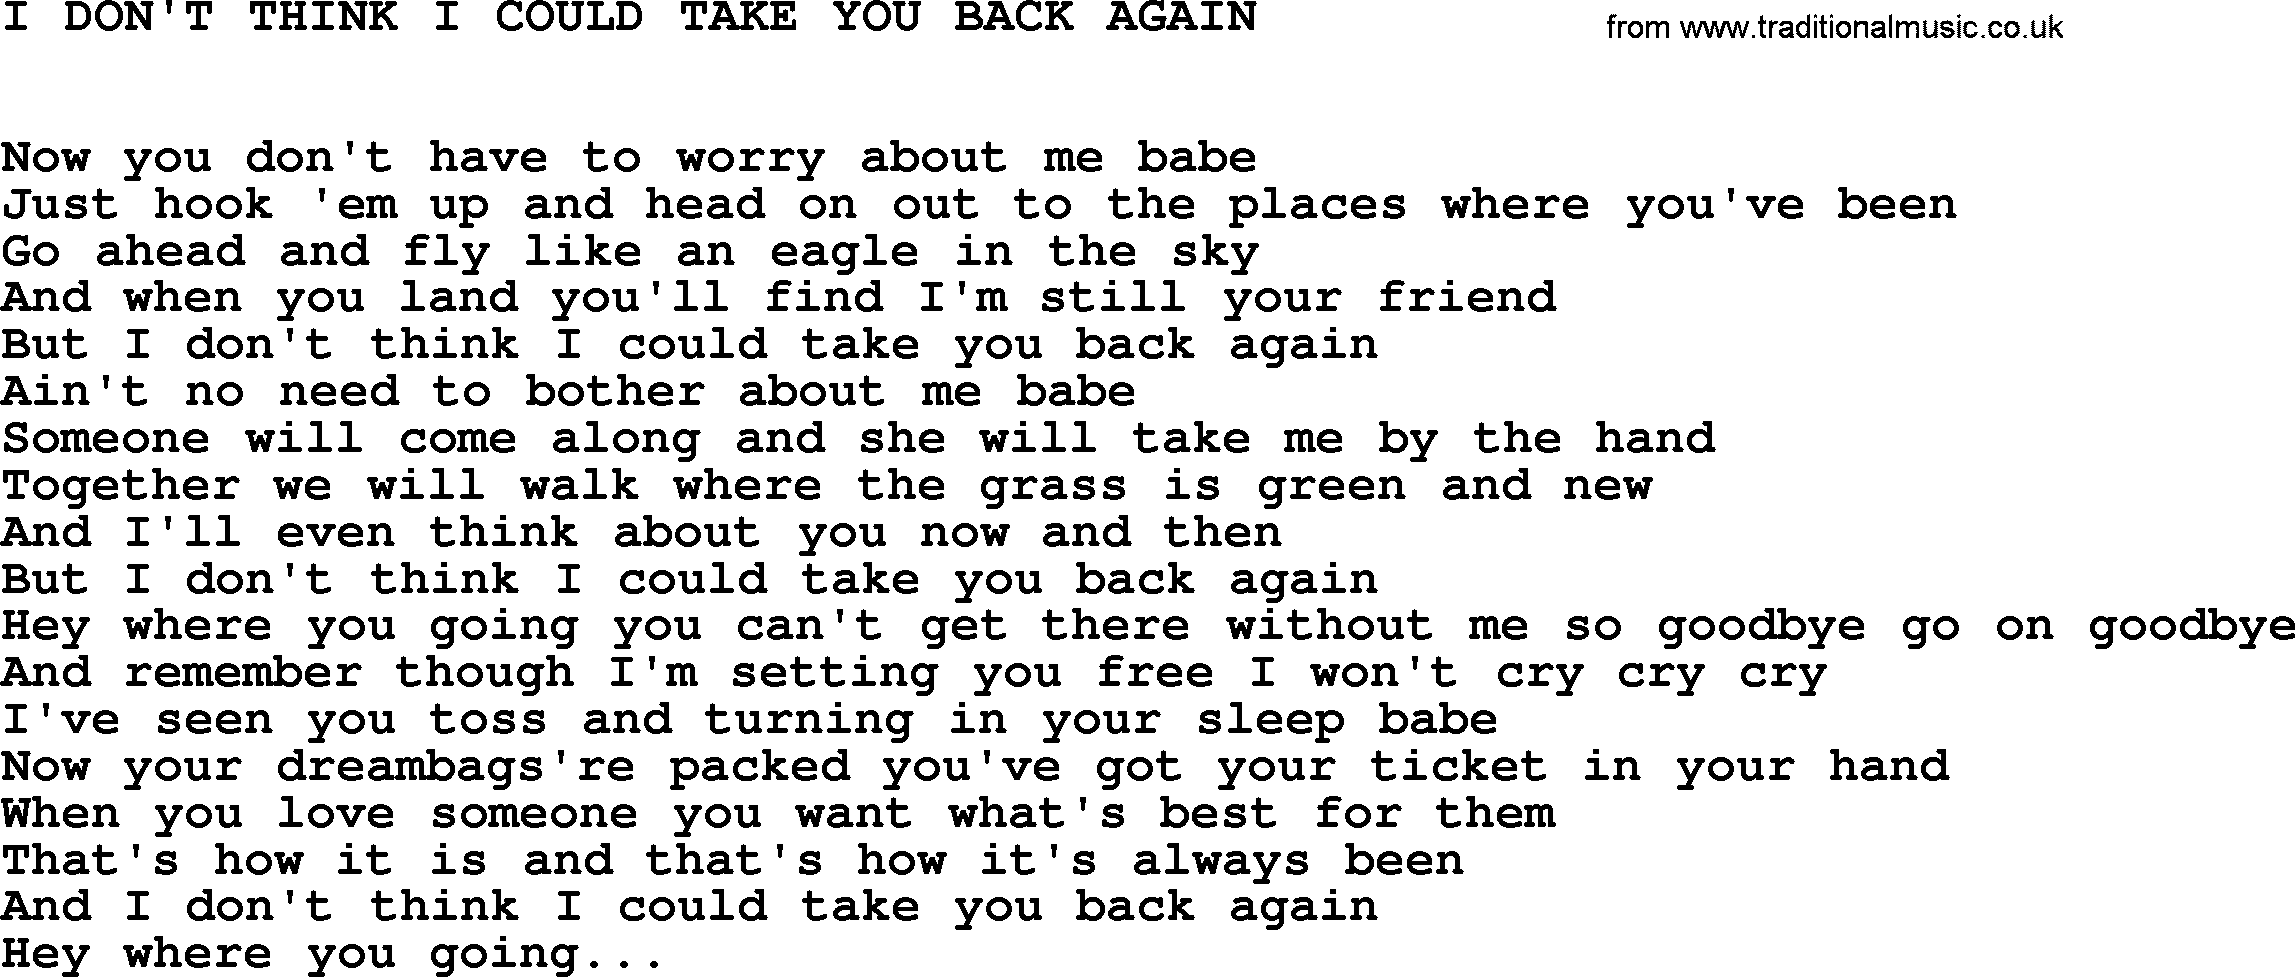 Johnny Cash song I Don't Think I Could Take You Back Again.txt lyrics